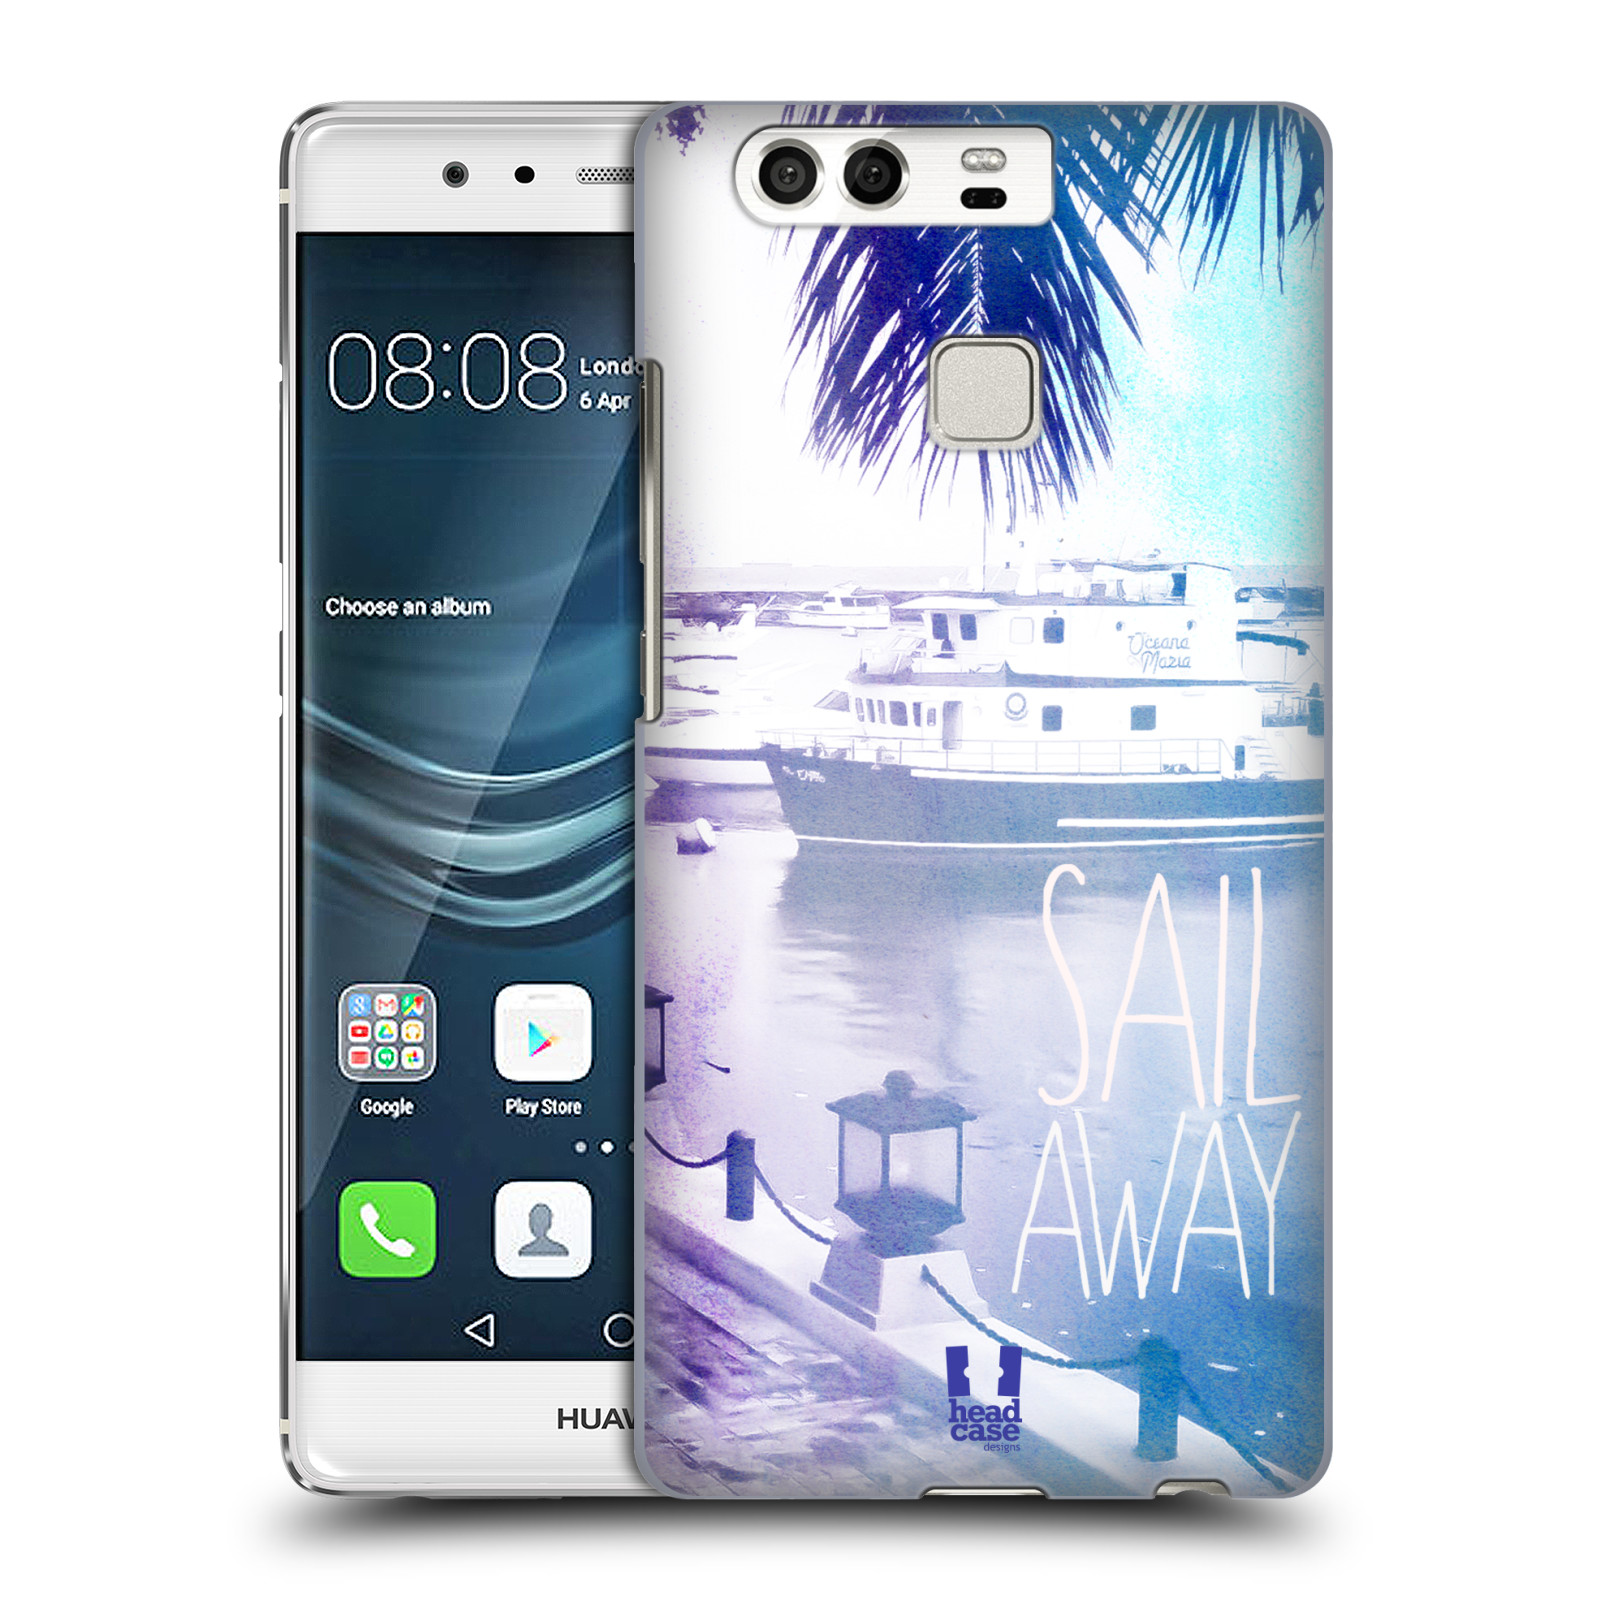 HEAD CASE plastový obal na mobil Huawei P9 / P9 DUAL SIM vzor Pozitivní vlny MODRÁ, přístav s loděmi SAIL AWAY